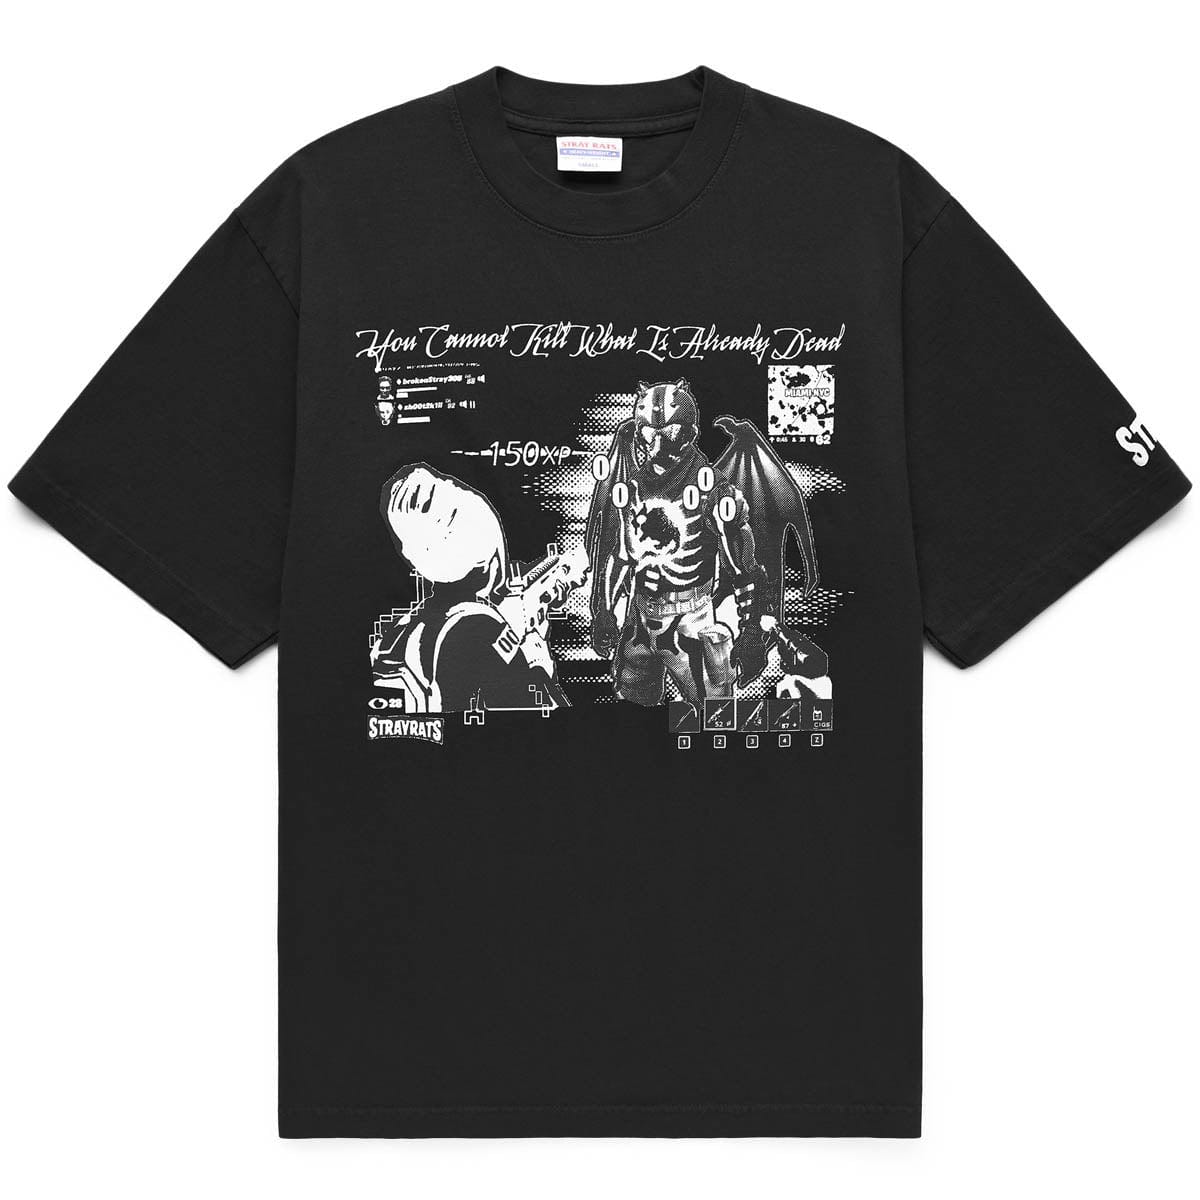 GmarShops - SHIRT BLACK - ALREADY DEAD T | Hotwire Biggie graphic hoodie